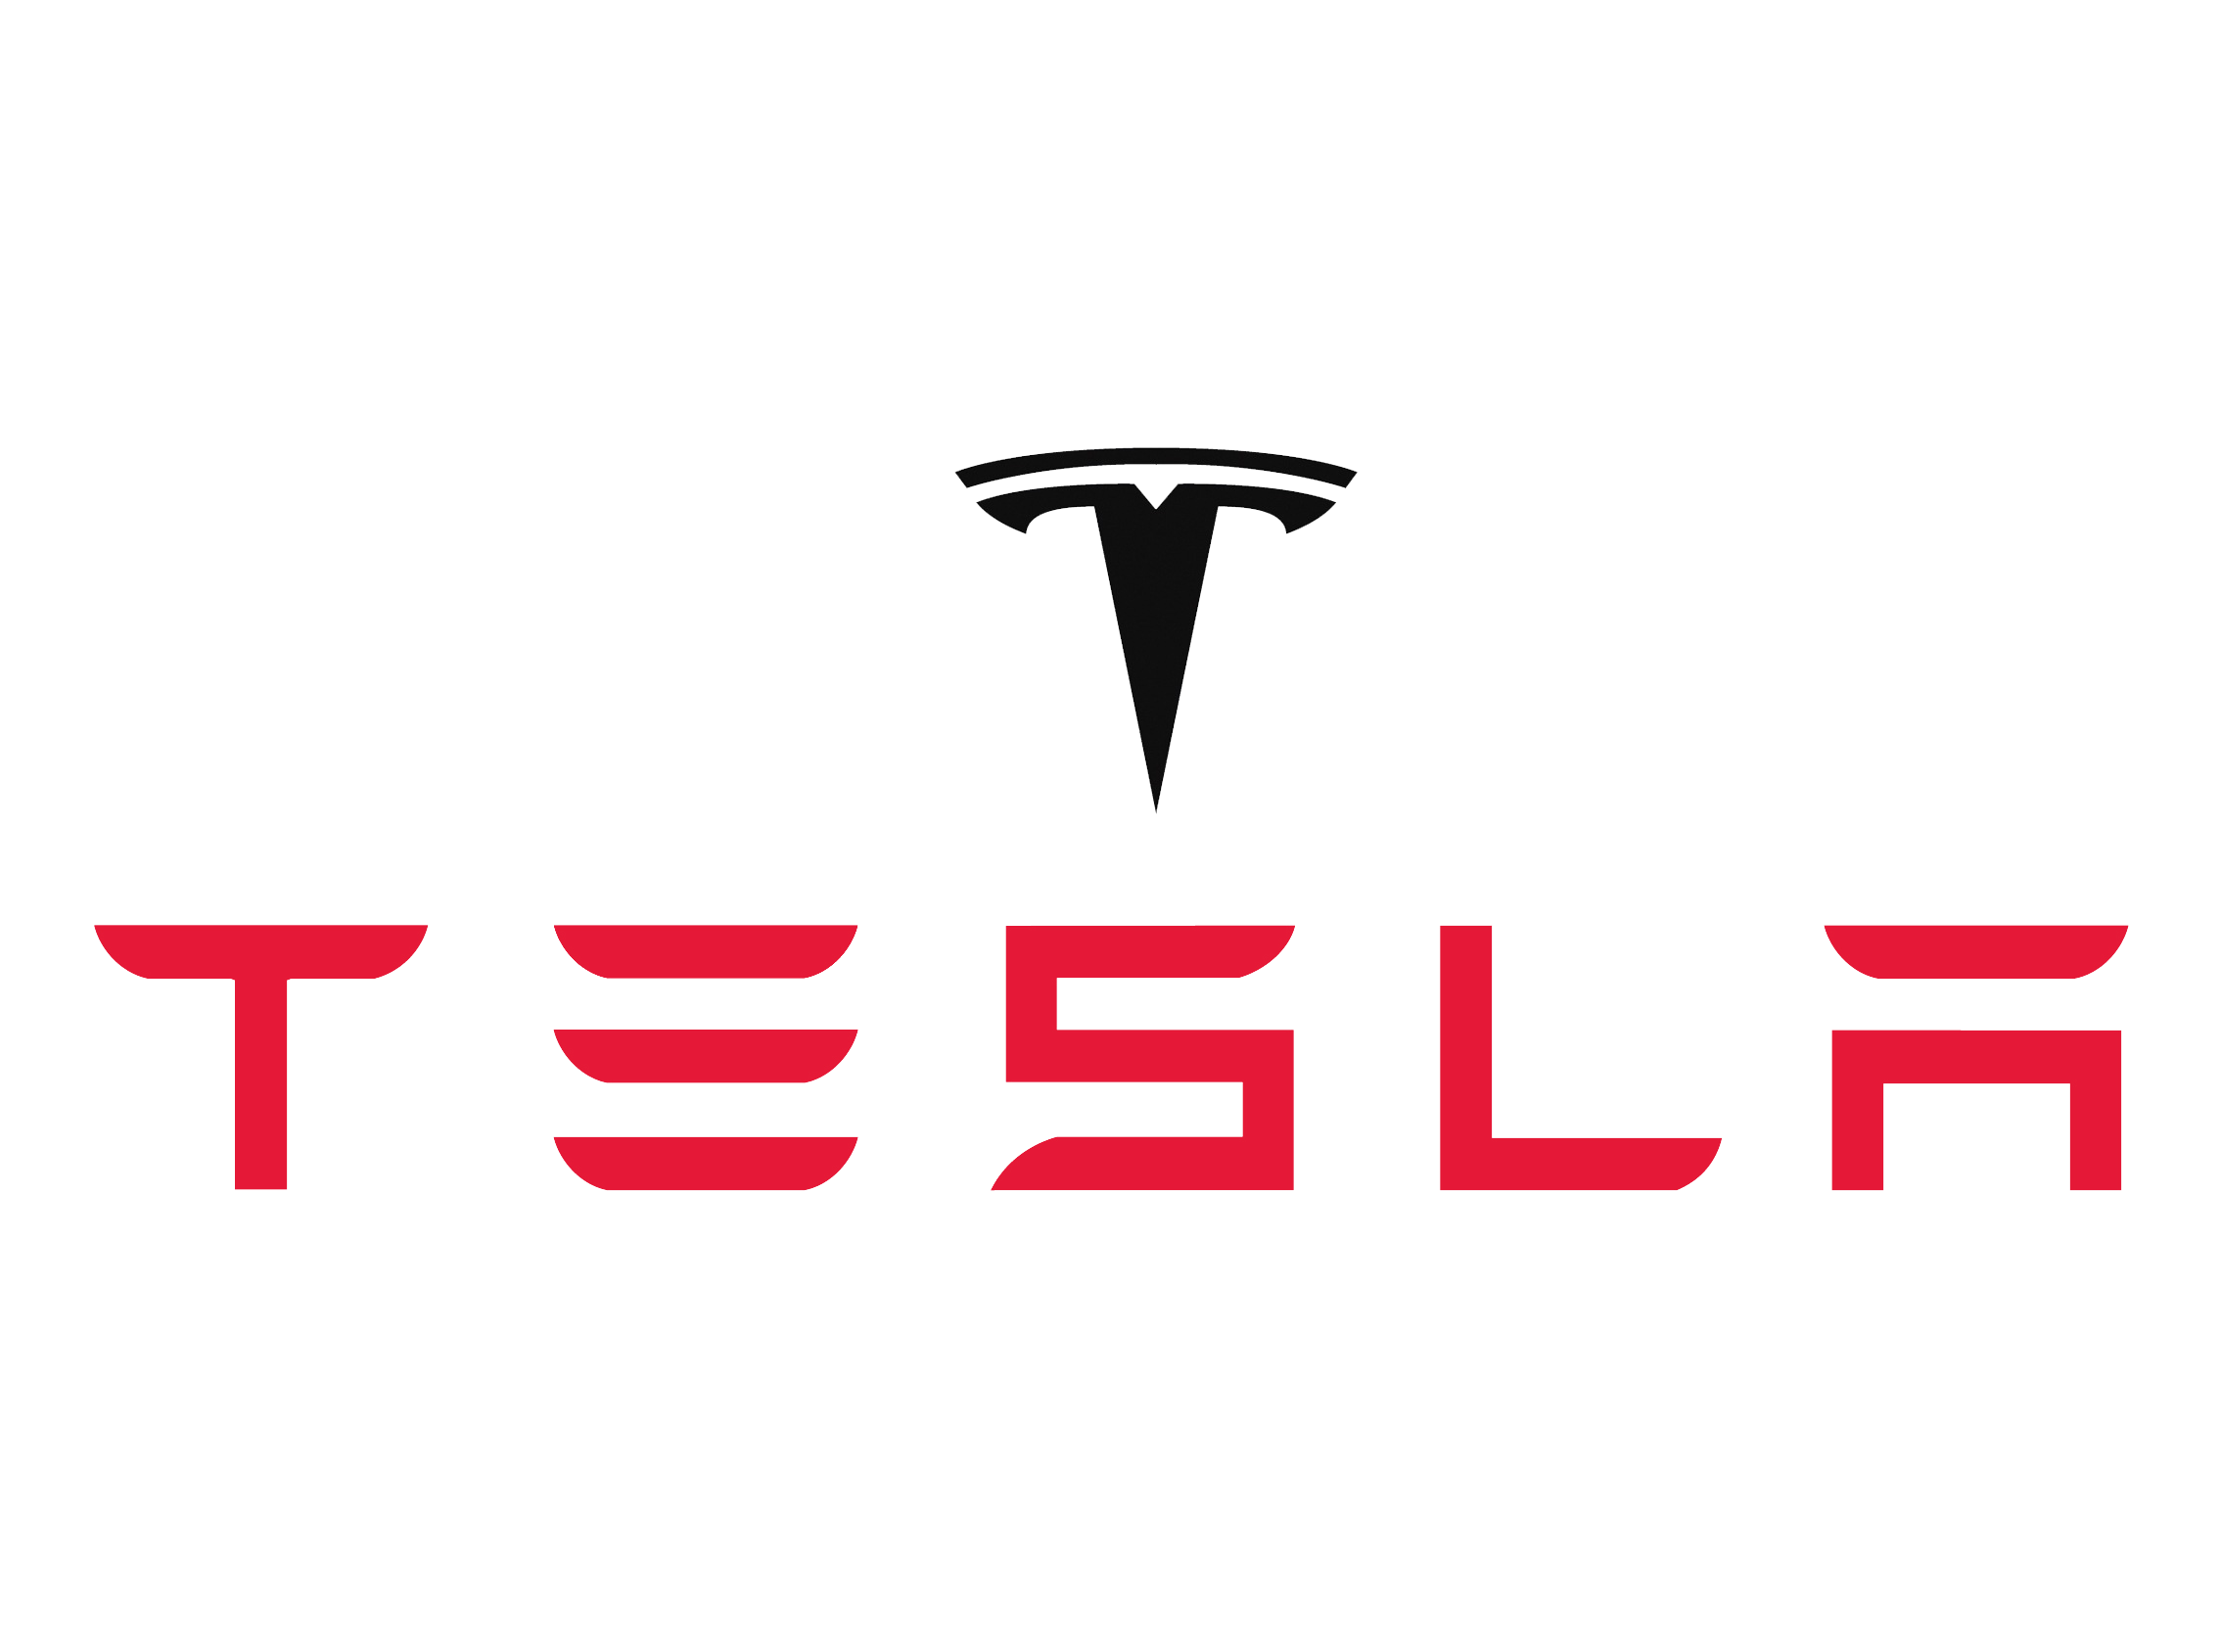 You'll never look at the Tesla logo the same way again | Creative Bloq